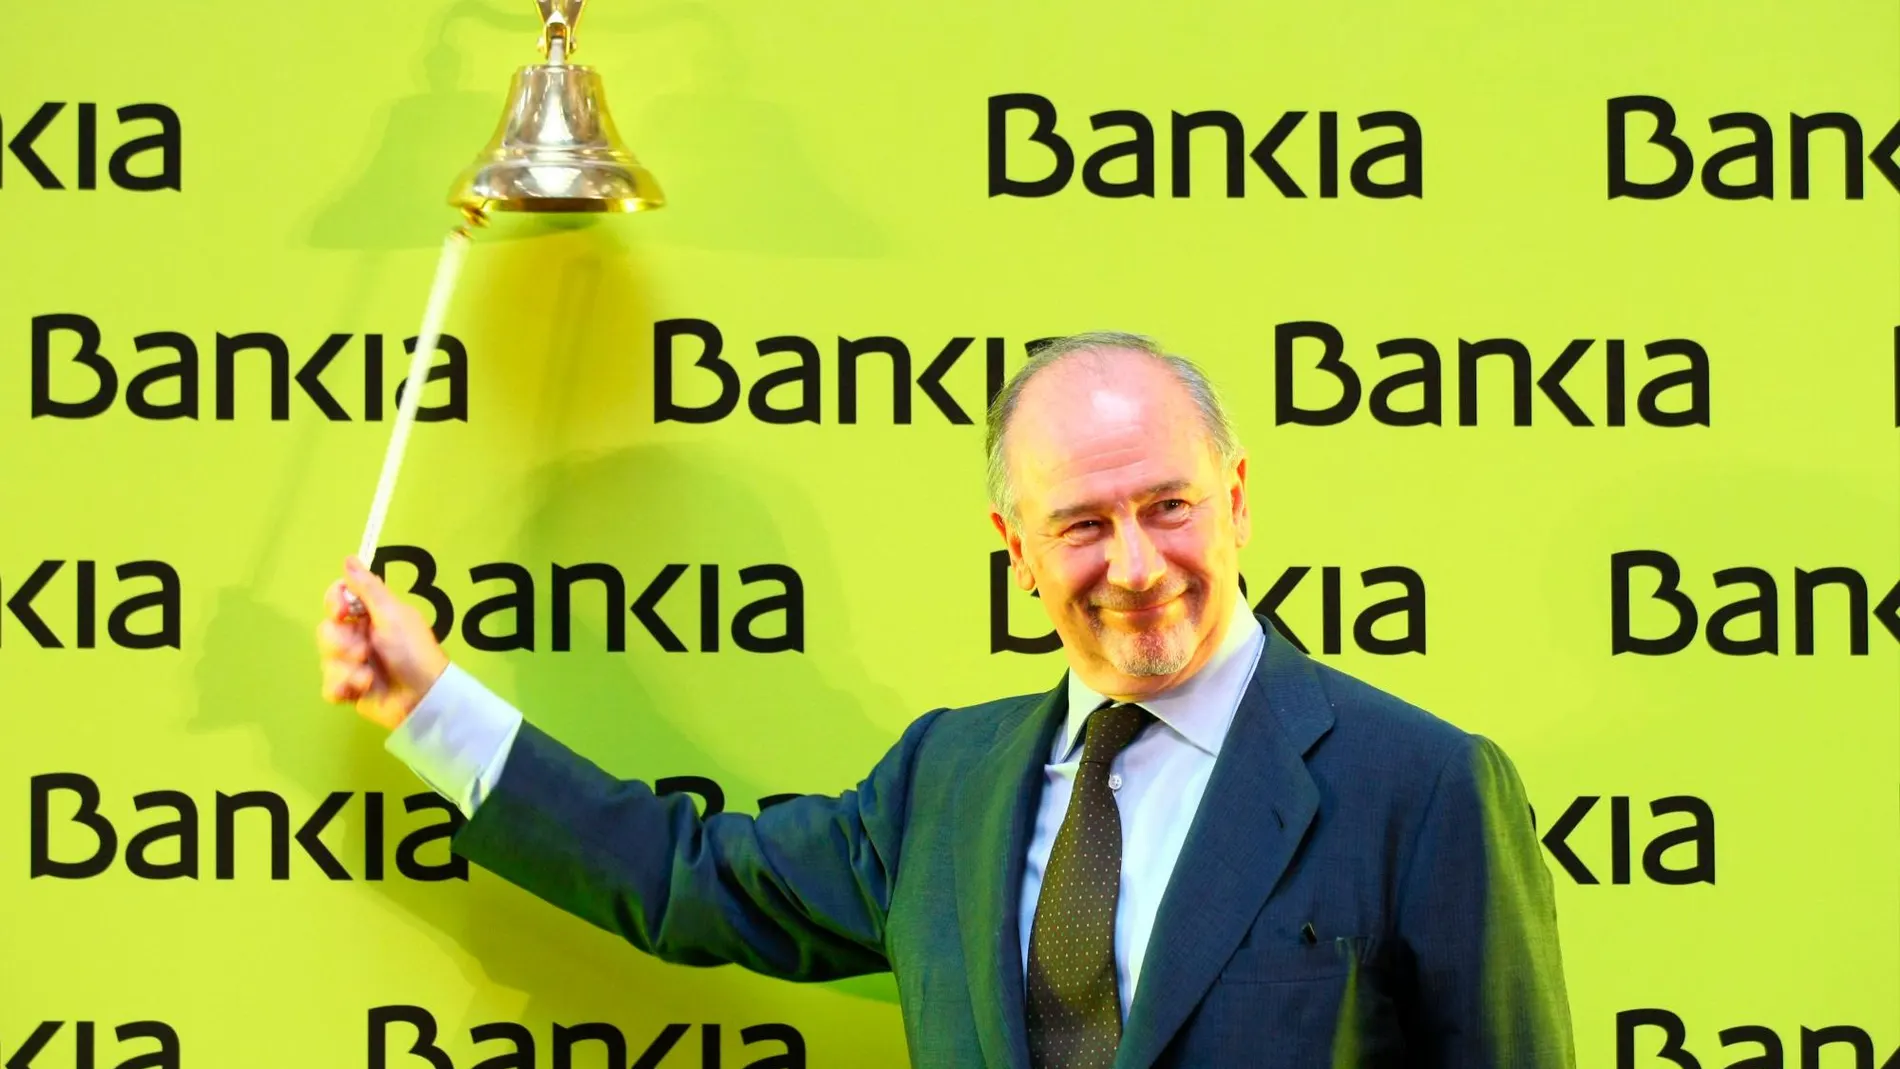 Rodrigo Rato, da el tradicional toque de campana en la salida de Bankia a Bolsa en 2001 / Foto: Jesús G. Feria